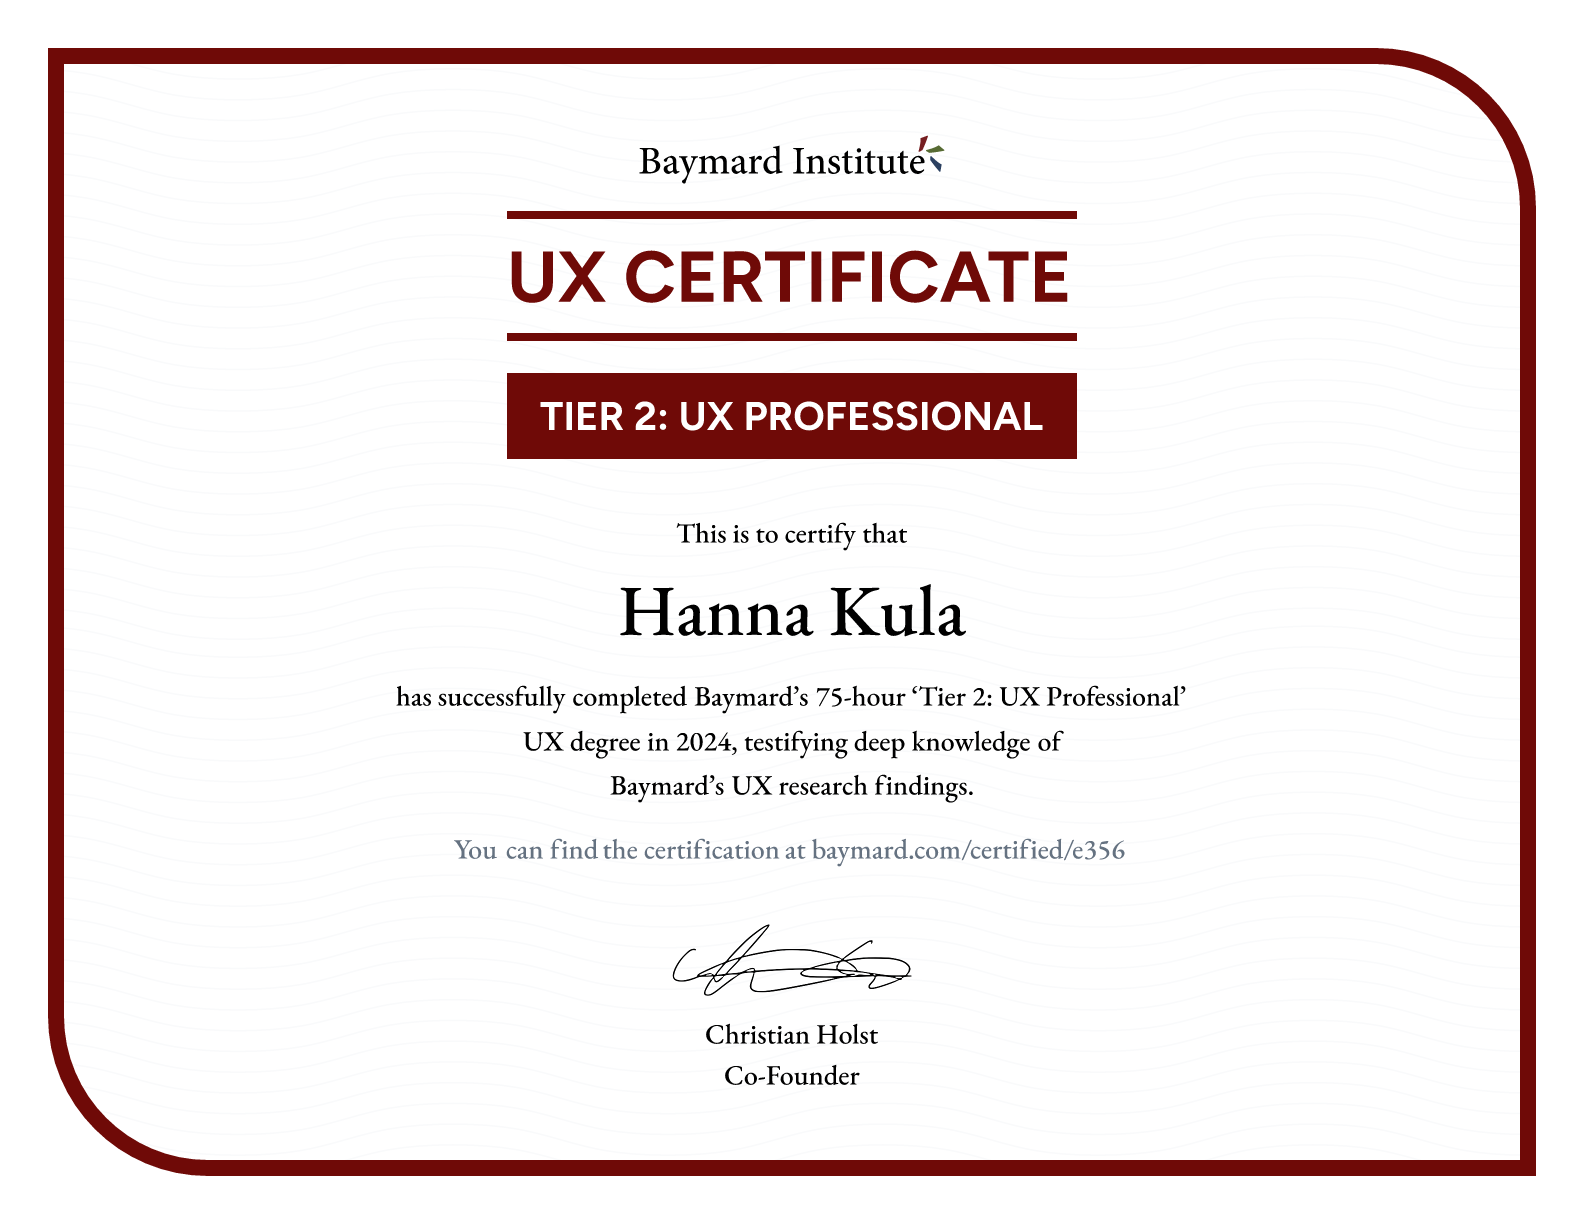 Hanna Kula’s certificate